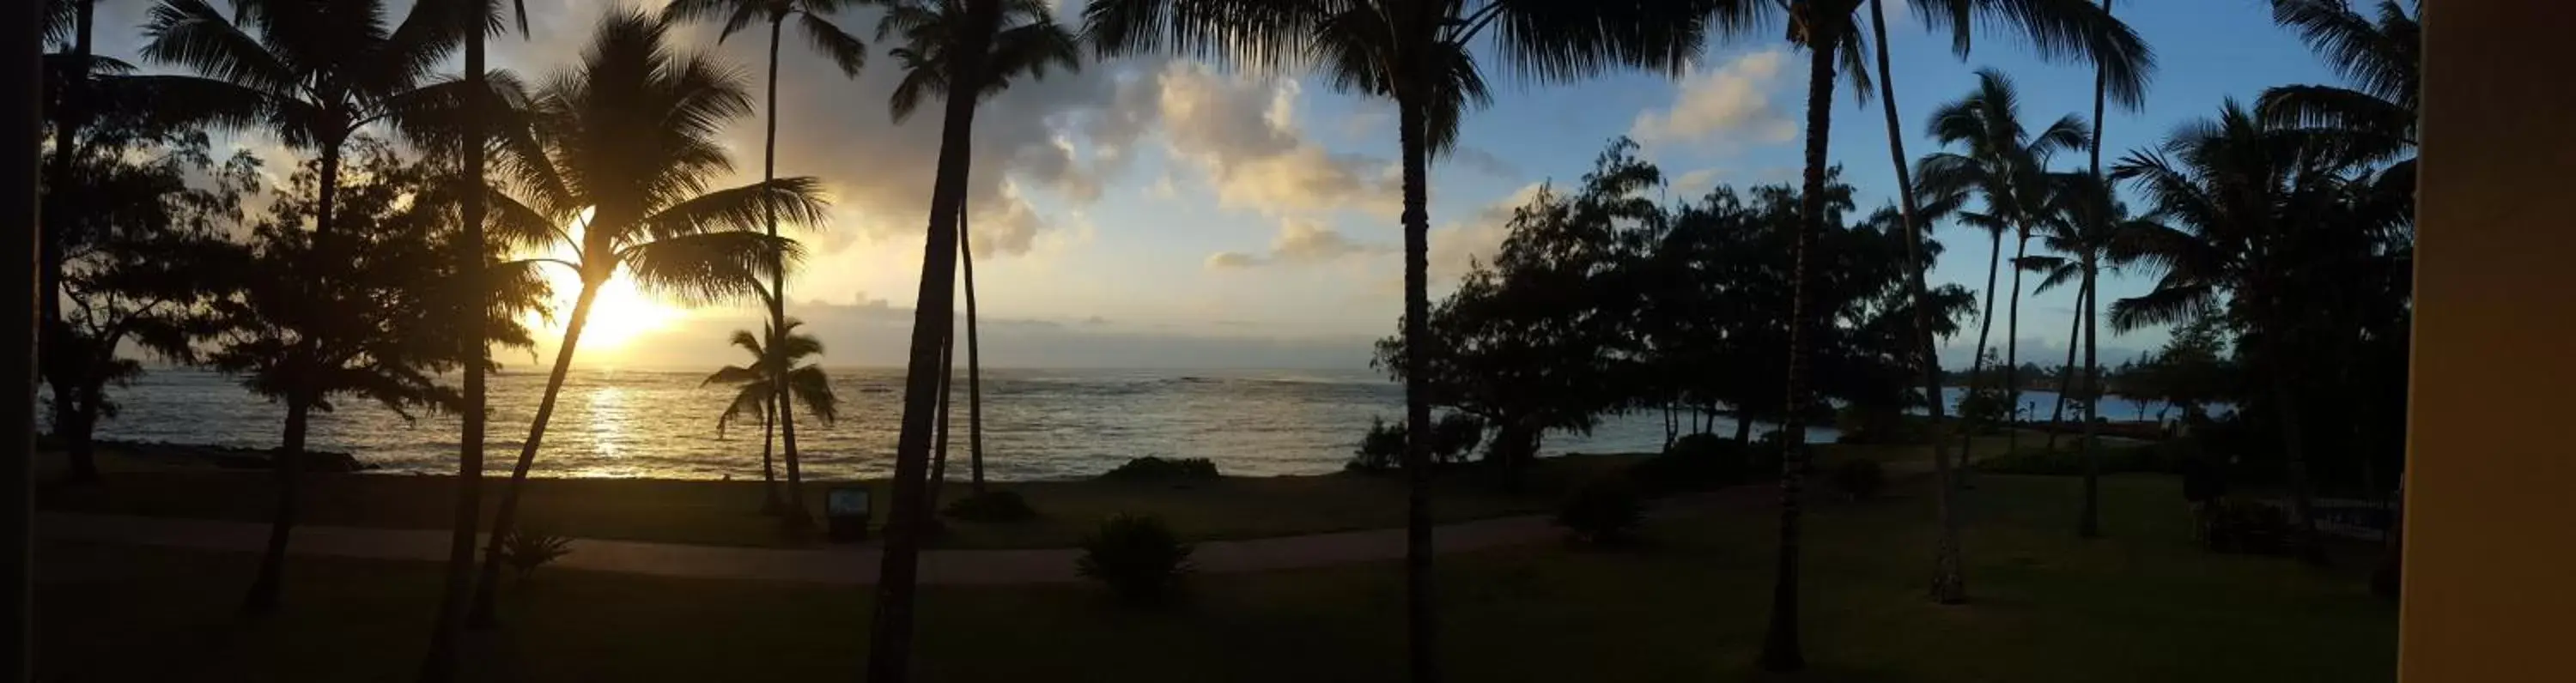 Natural landscape, Sunrise/Sunset in Hotel Coral Reef